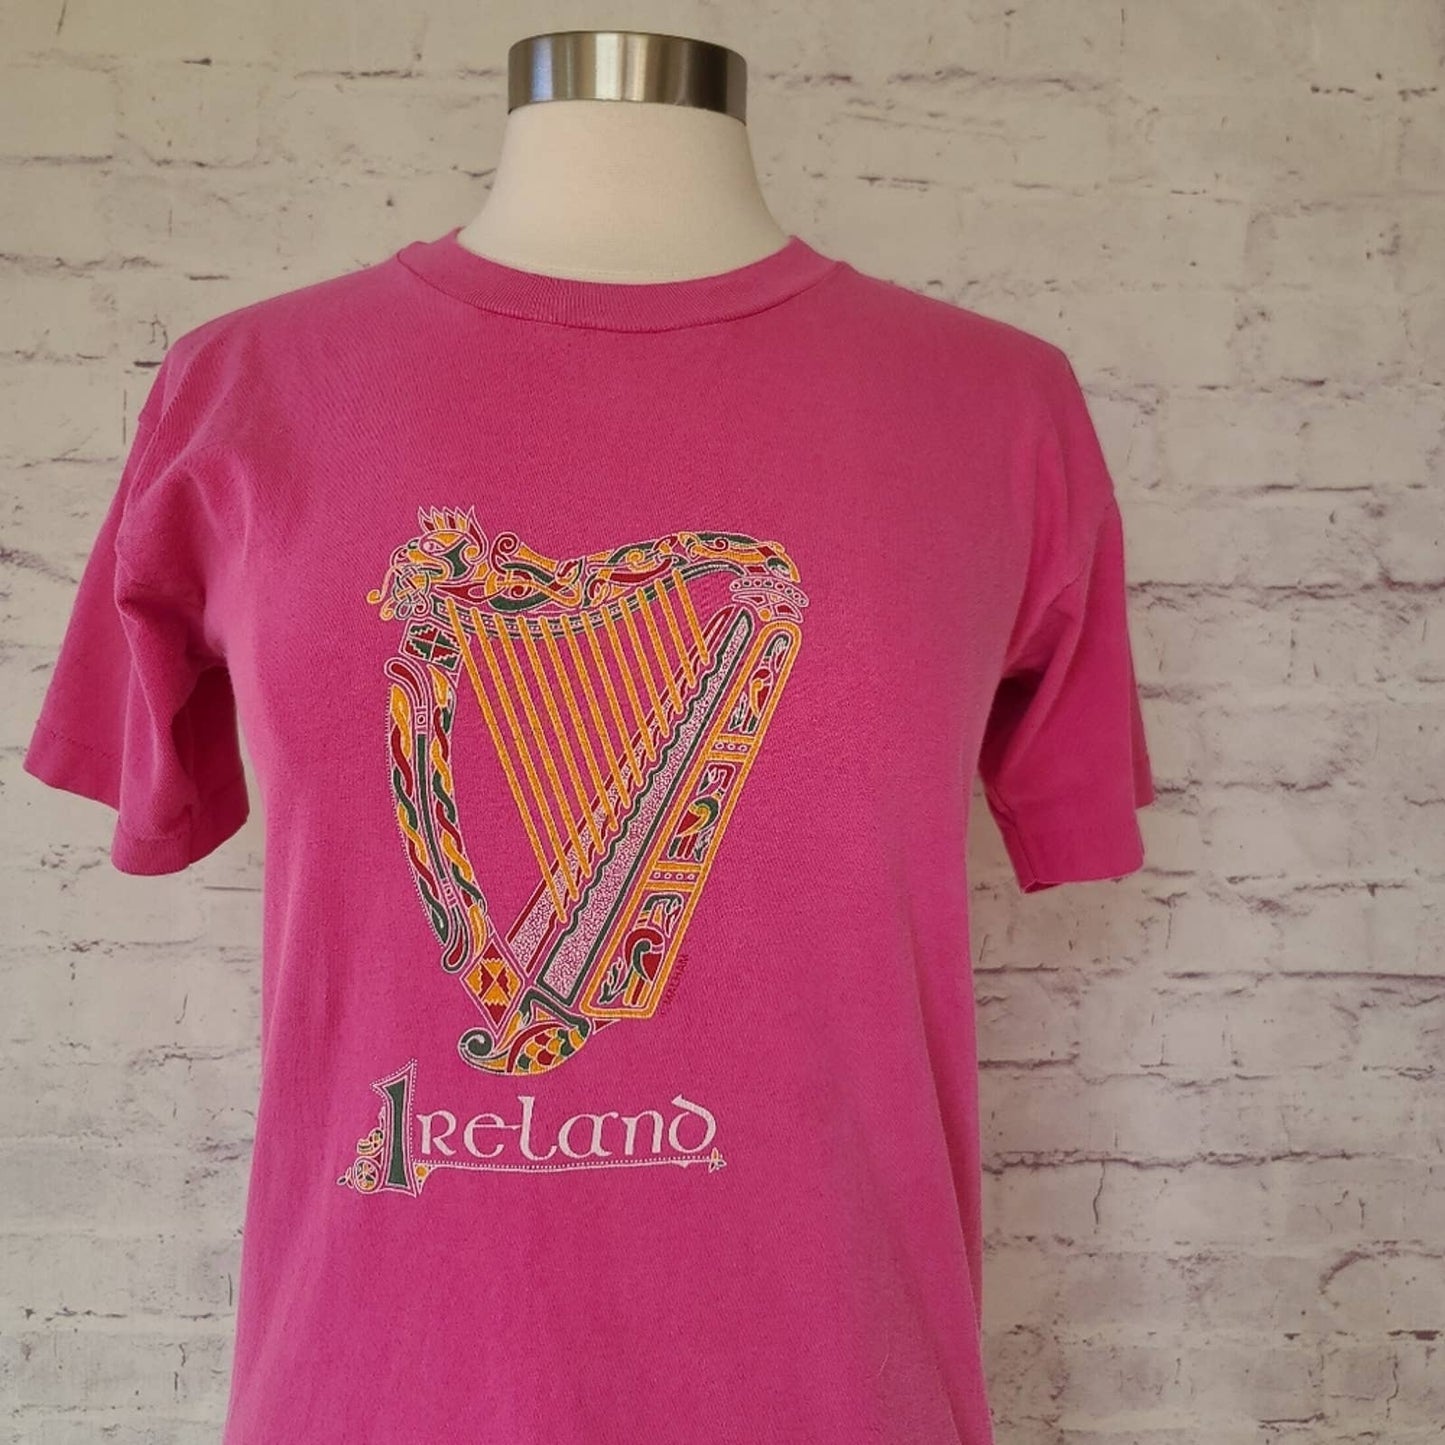 Vintage Dolman Design Made in Ireland Harp Print Single Stitch Tee Pink Medium